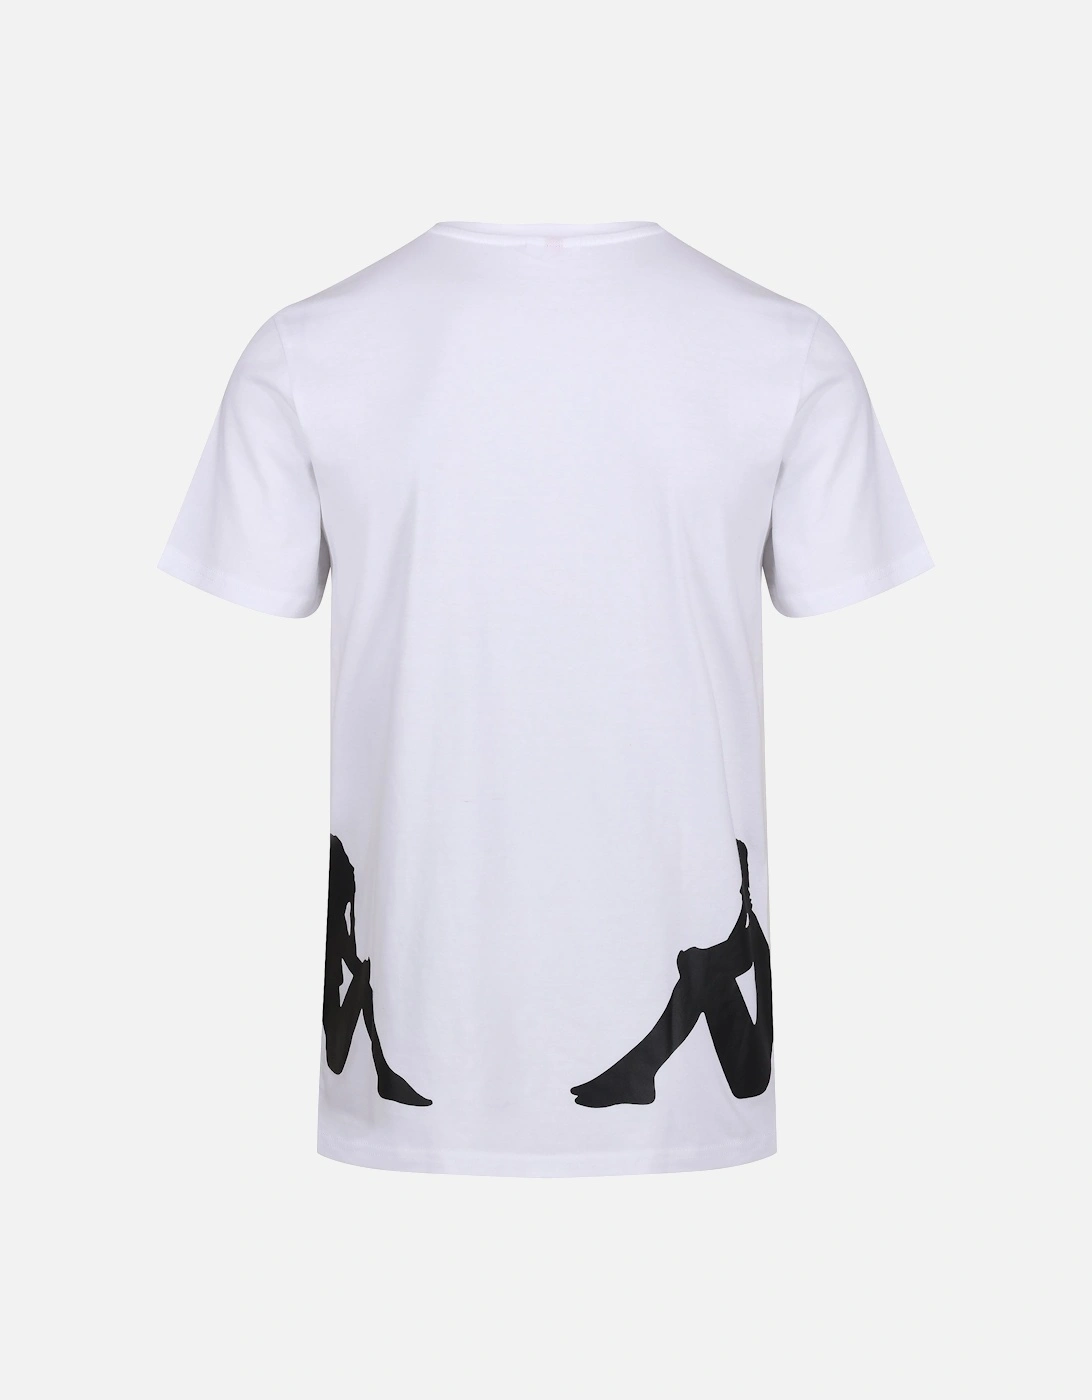 Authentic Fico Unisex Regular Fit Crew Neck T-Shirt | White/Black